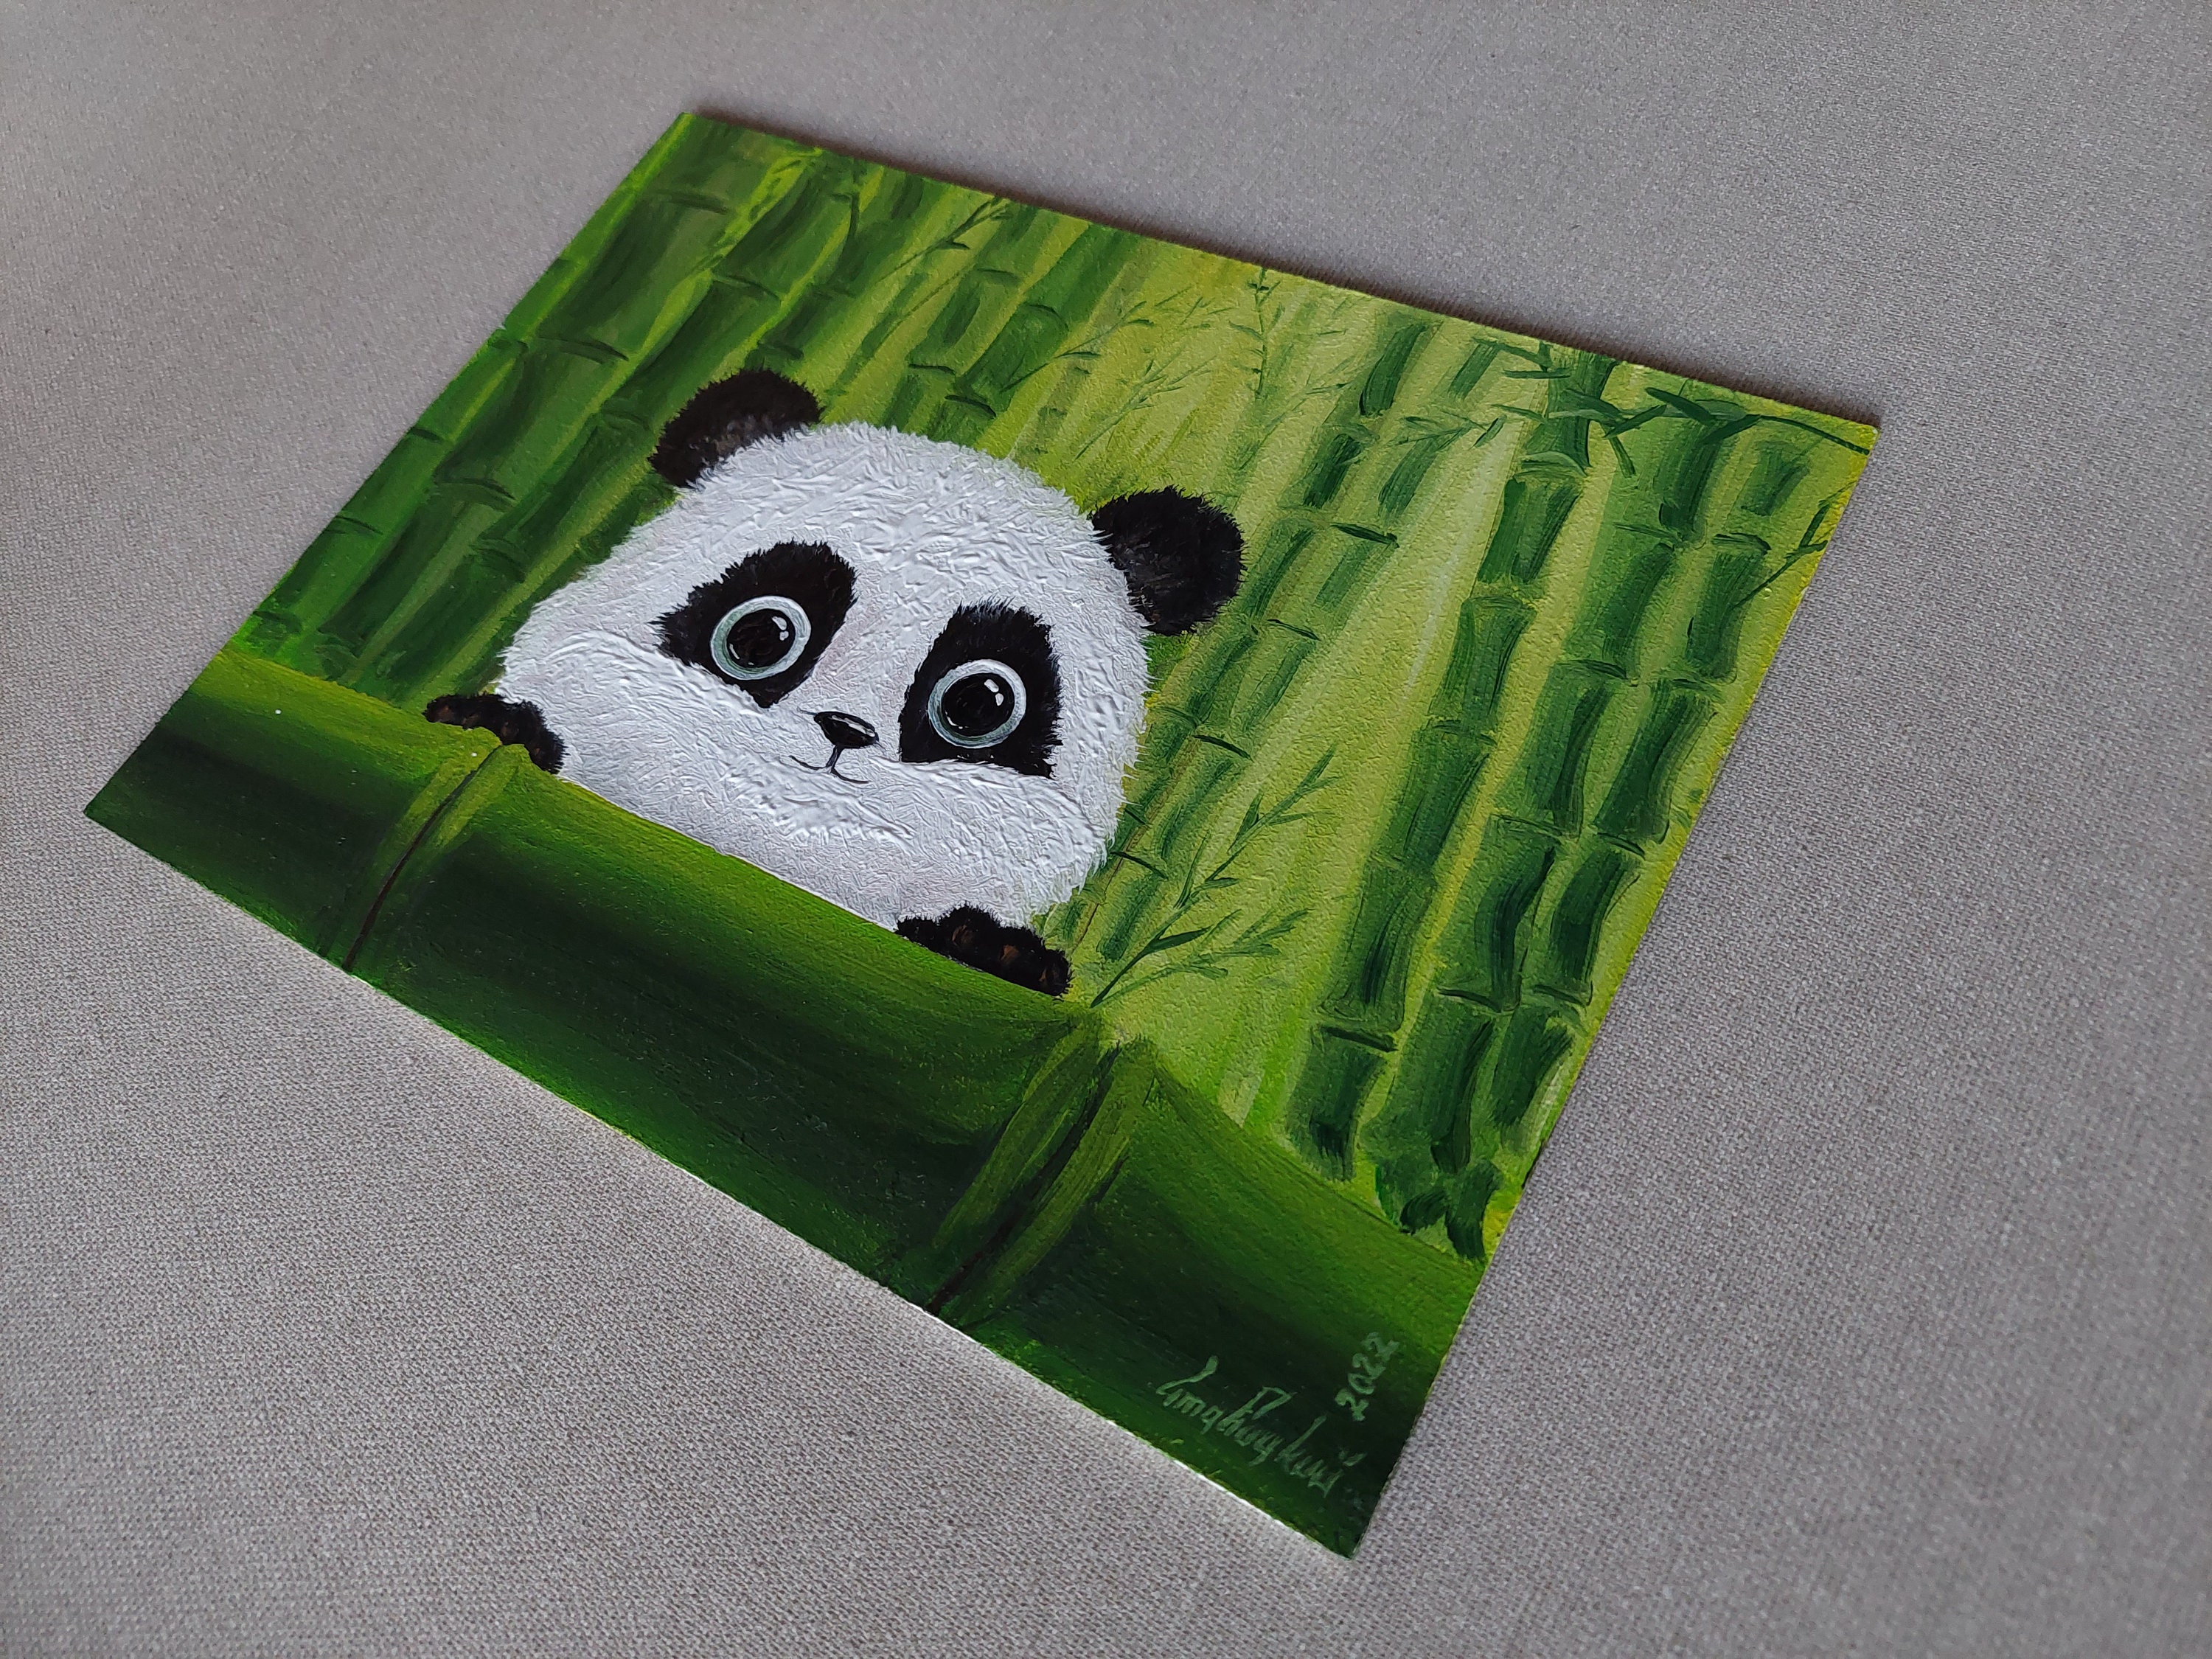 Sweet Panda Green Canvas Wall Art by Mimo Cadeaux